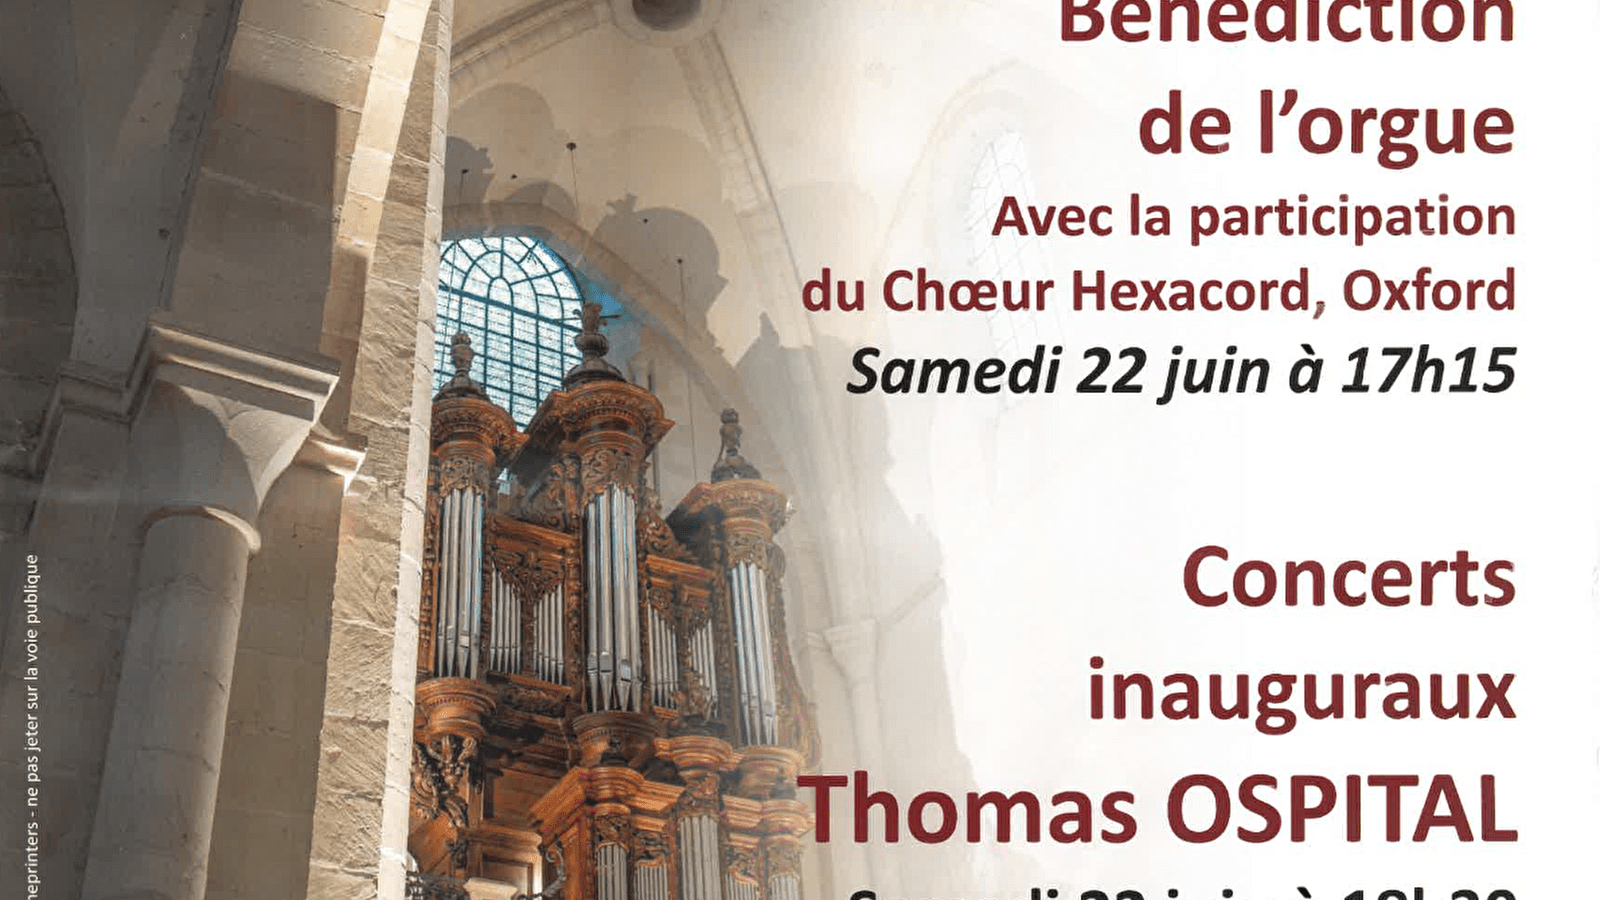 Inauguration of the Pontigny Organ